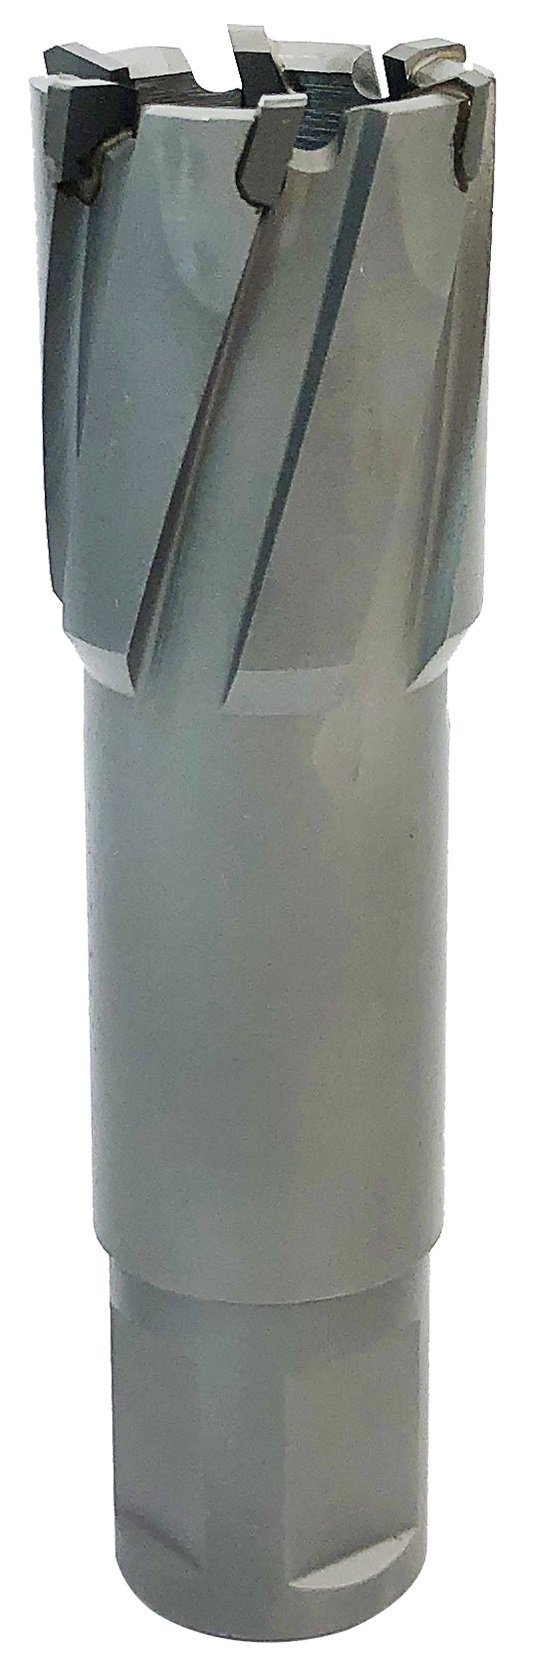 Корончатое сверло (фреза кольцевая) Ø20 L=55/92 мм №313 WELDON19 TCT (твердый сплав) ТМ ПрофОснастка